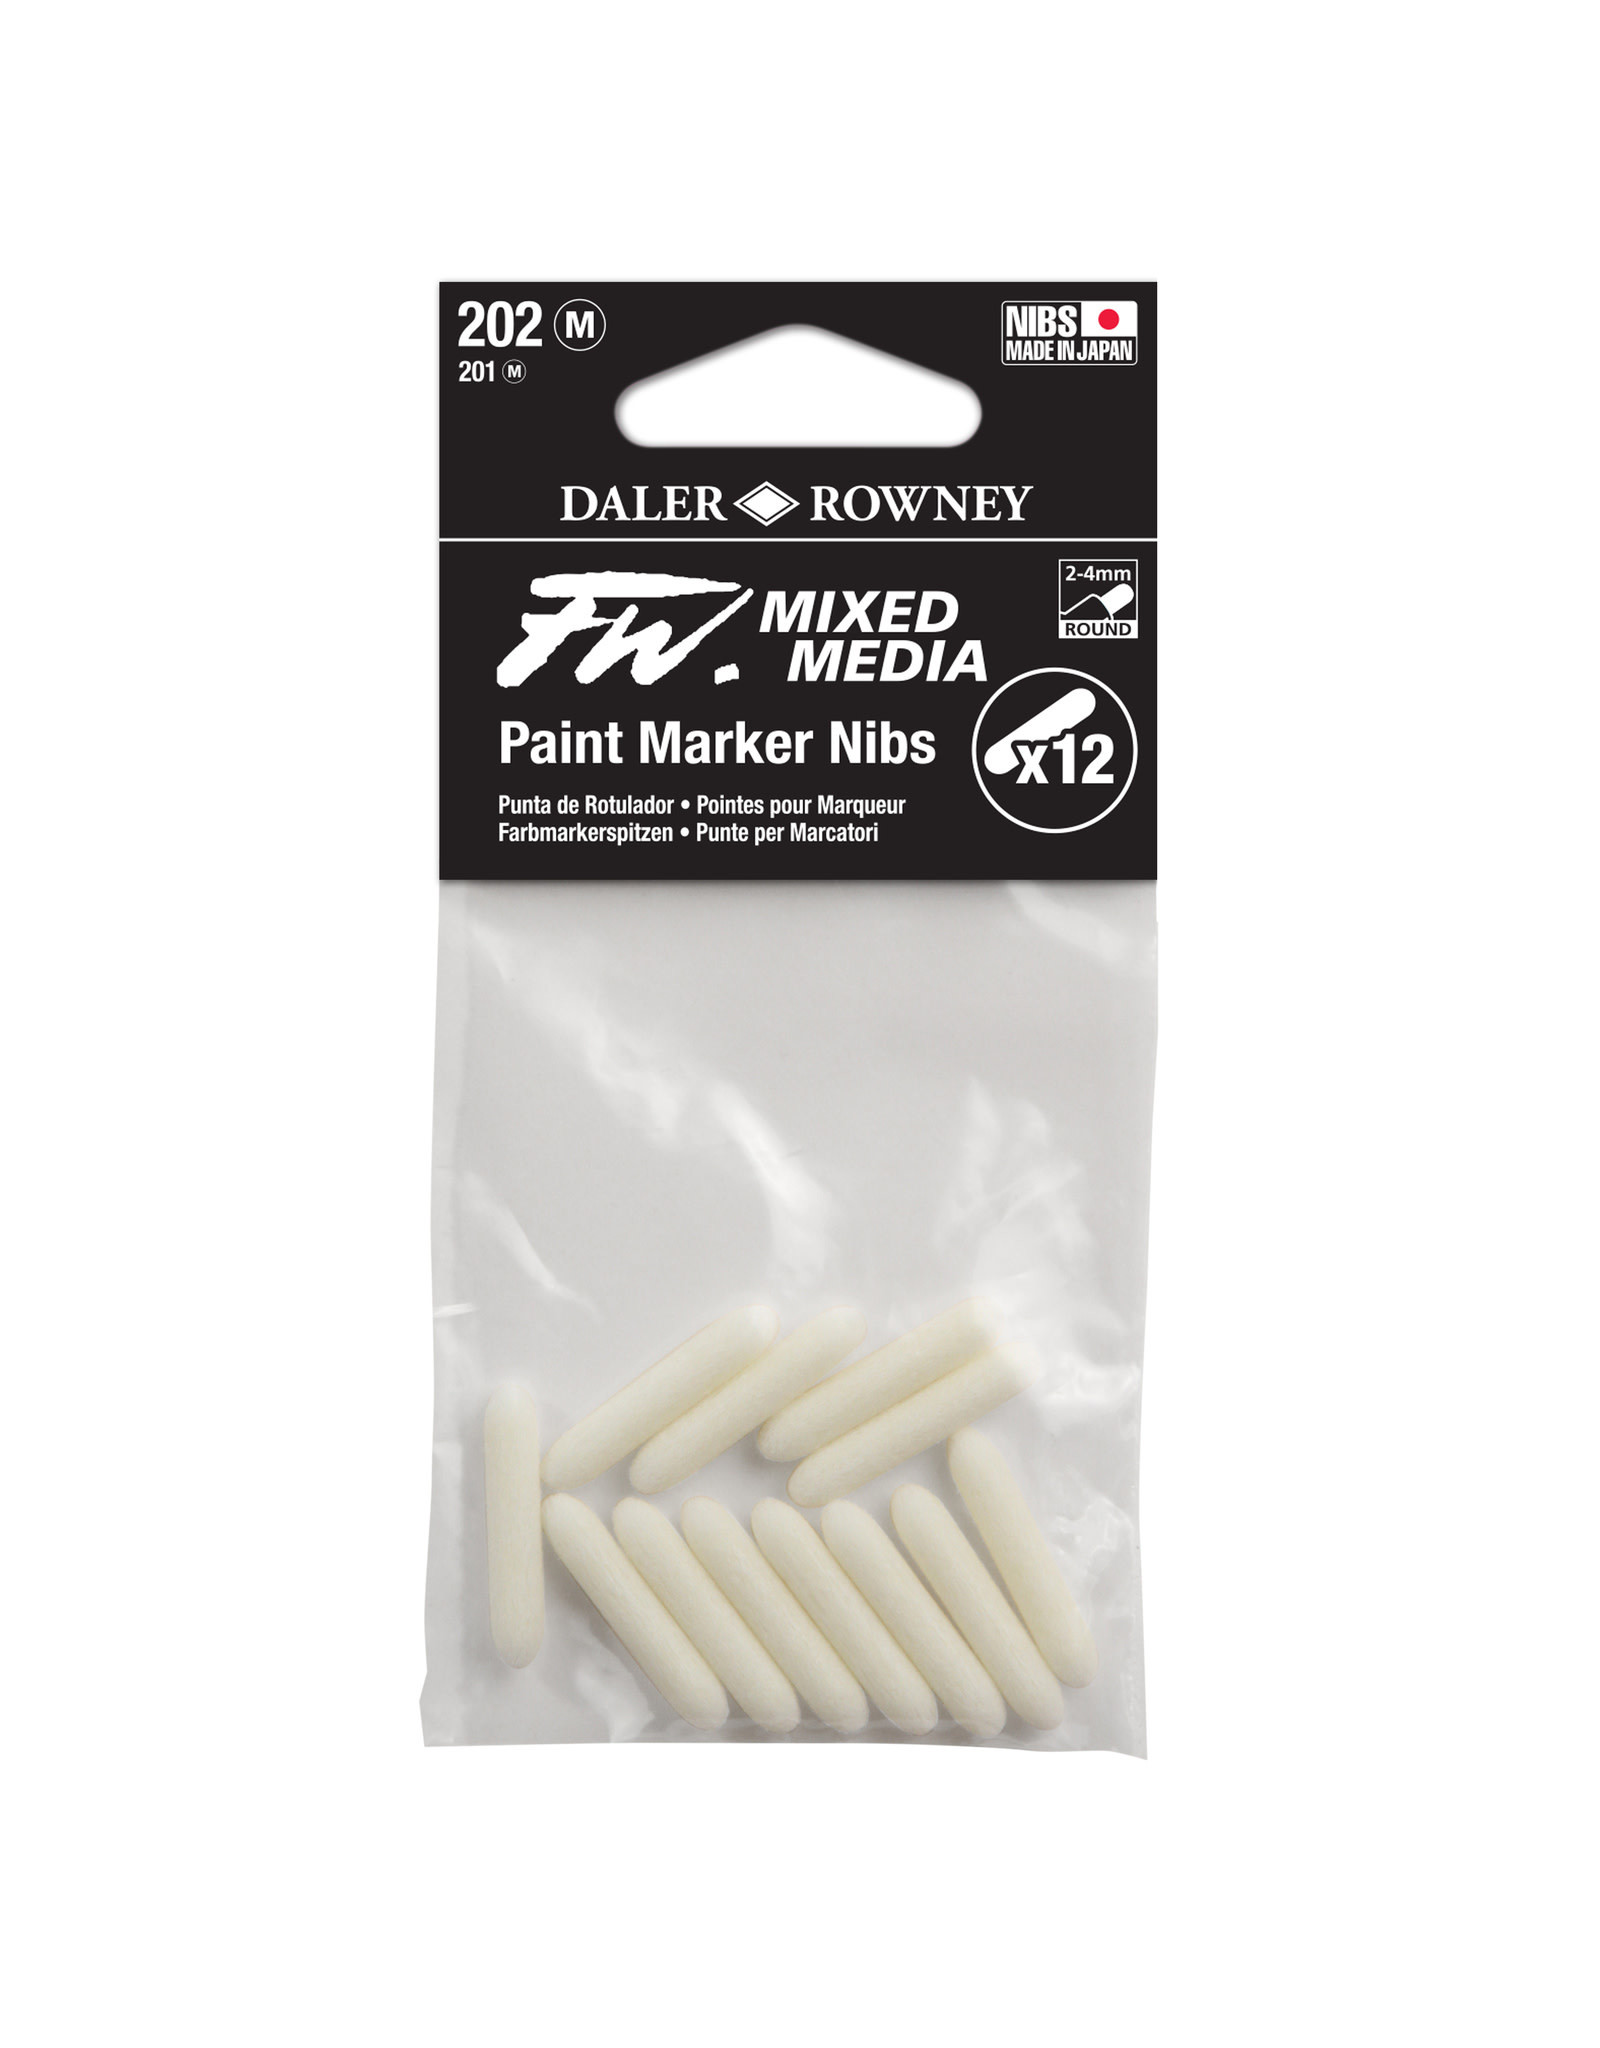 Daler-Rowney Daler-Rowney FW Paint Marker Nib Set of 12, 2-4mm, Round